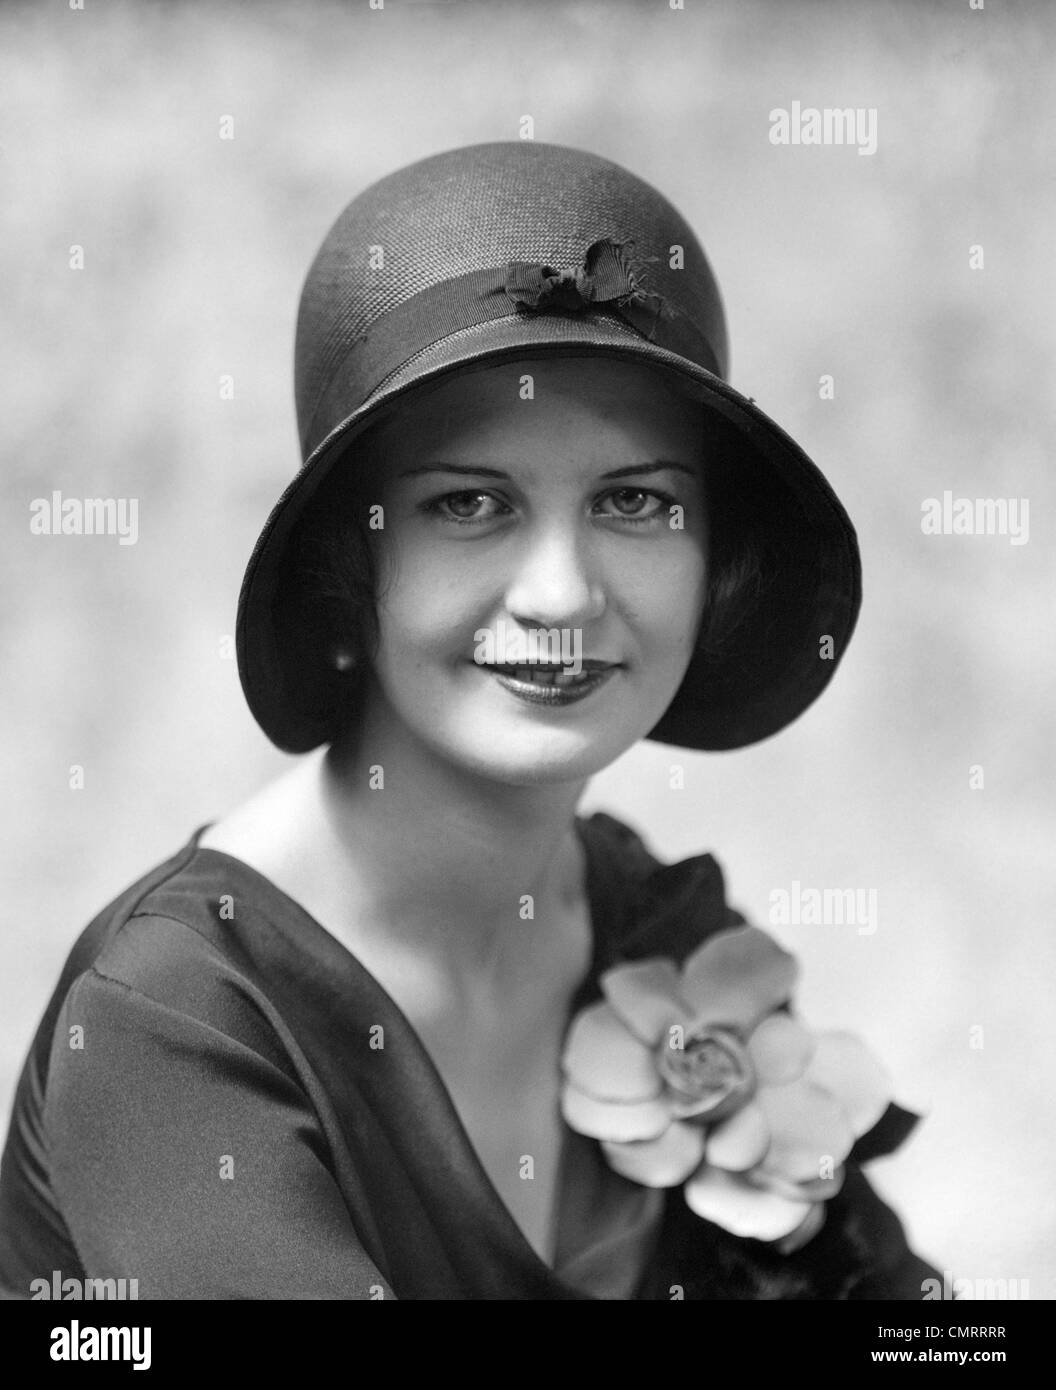 1930s HEAD & SHOULDERS PORTRAIT OF SMILING WOMAN WEARING HAT & FLOWER ON BLOUSE Stock Photo